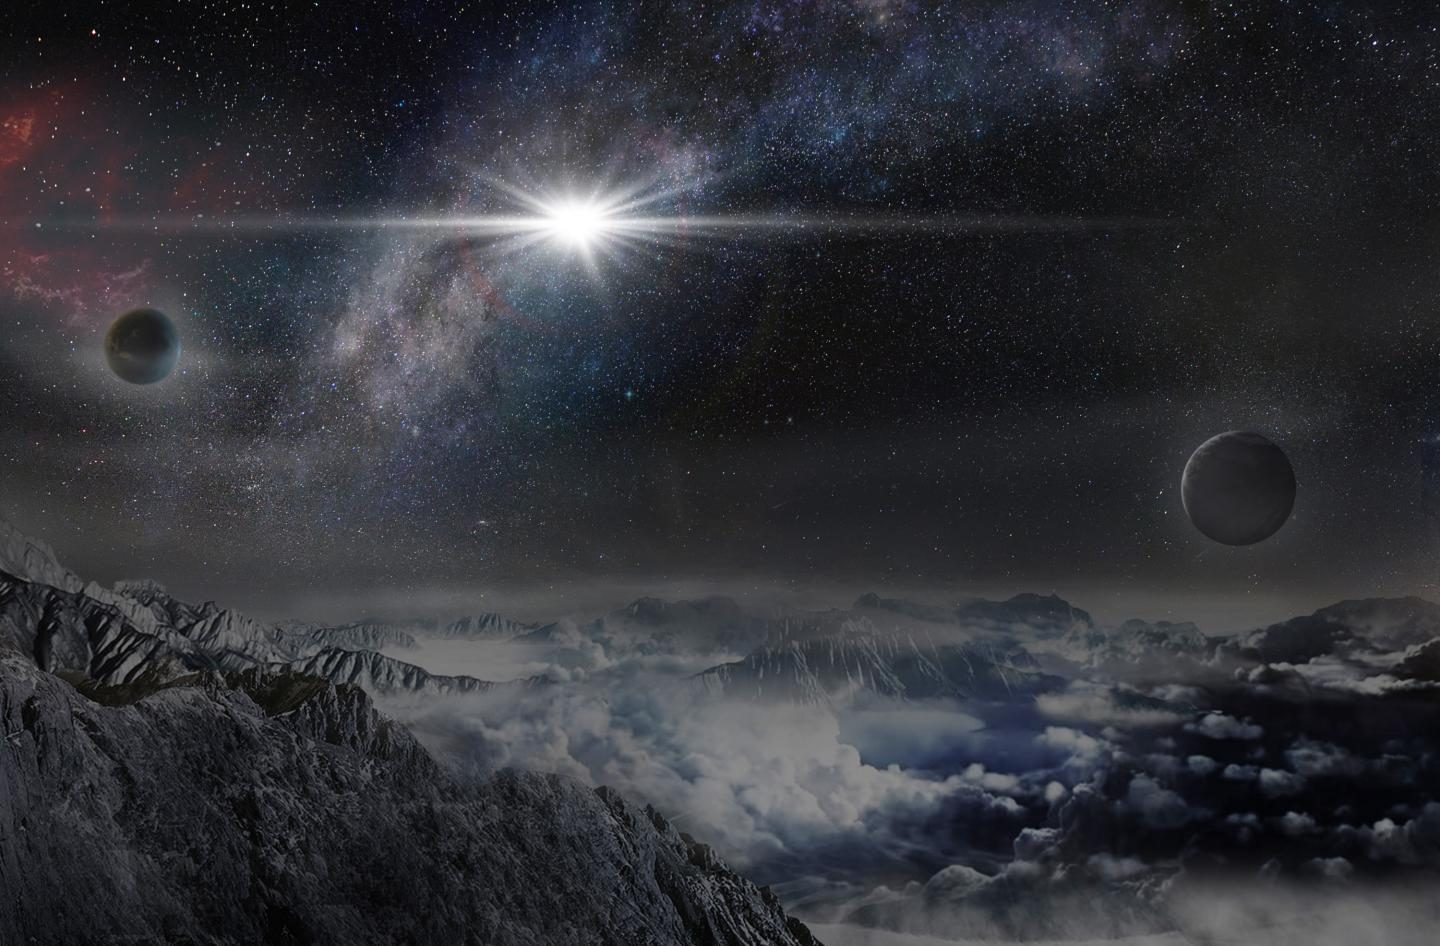 Exploding star shines brighter than any supernova seen